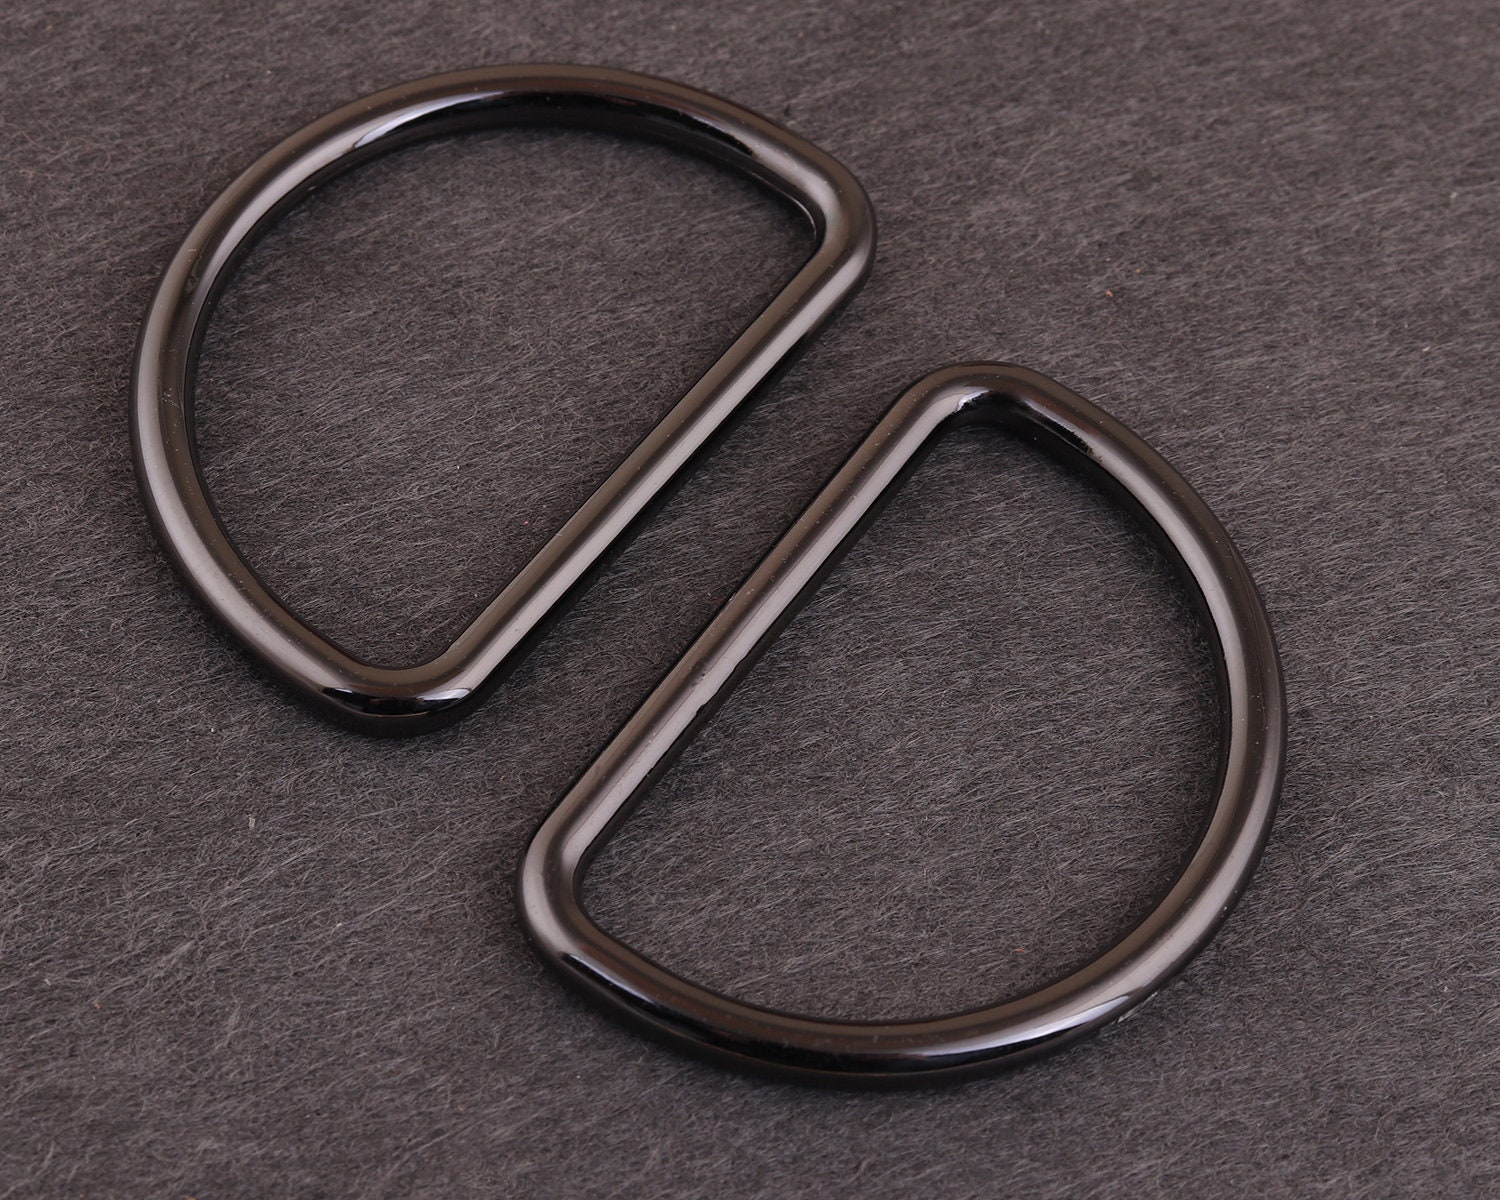 D-rings 1 3/4''45mm Gold/silver/black Metal Adjustable D Buckles D